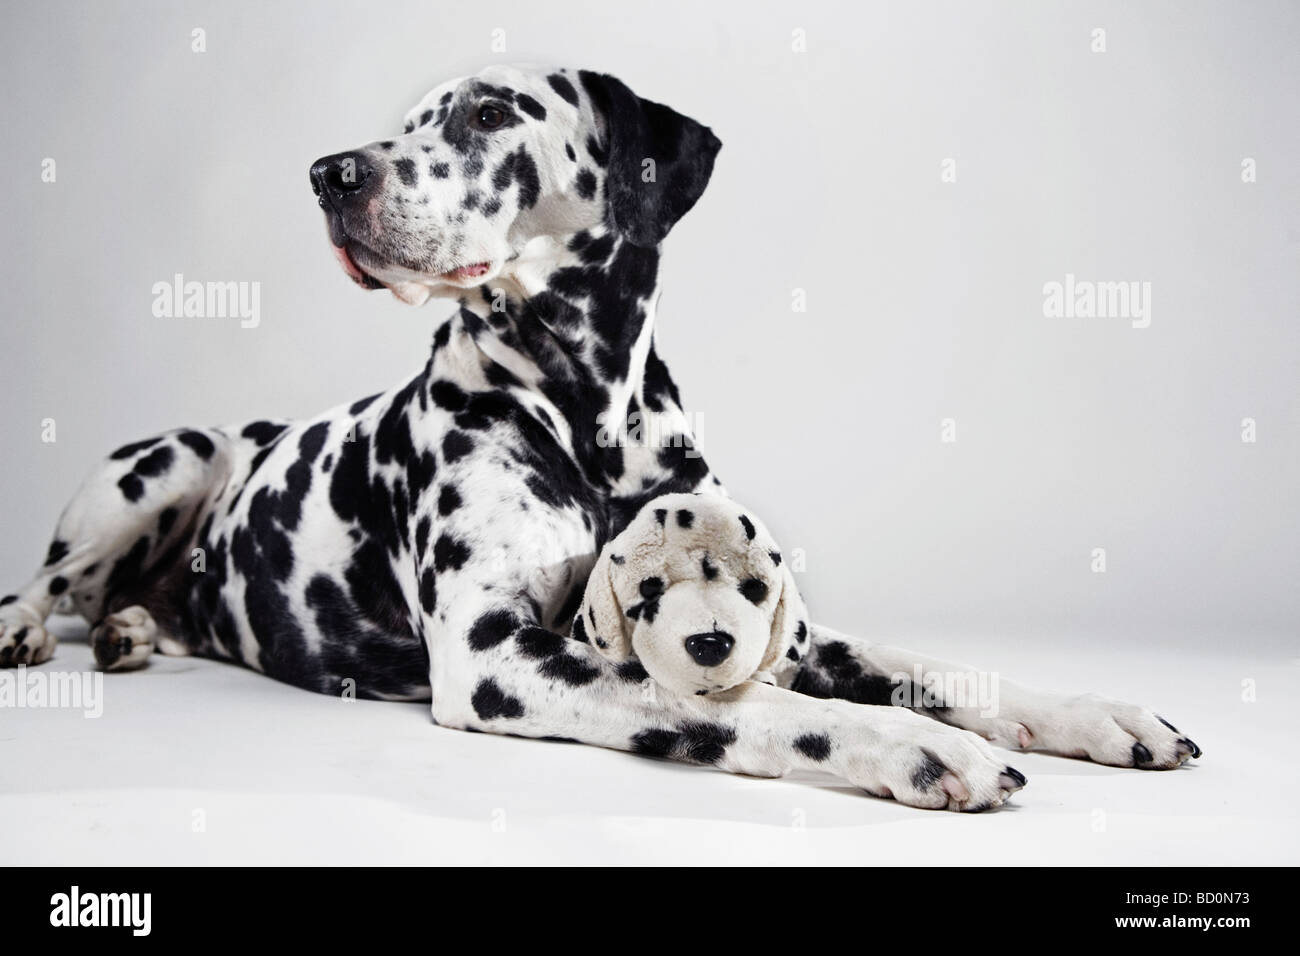 New handmade standing felt dog white with black dalmatian style 